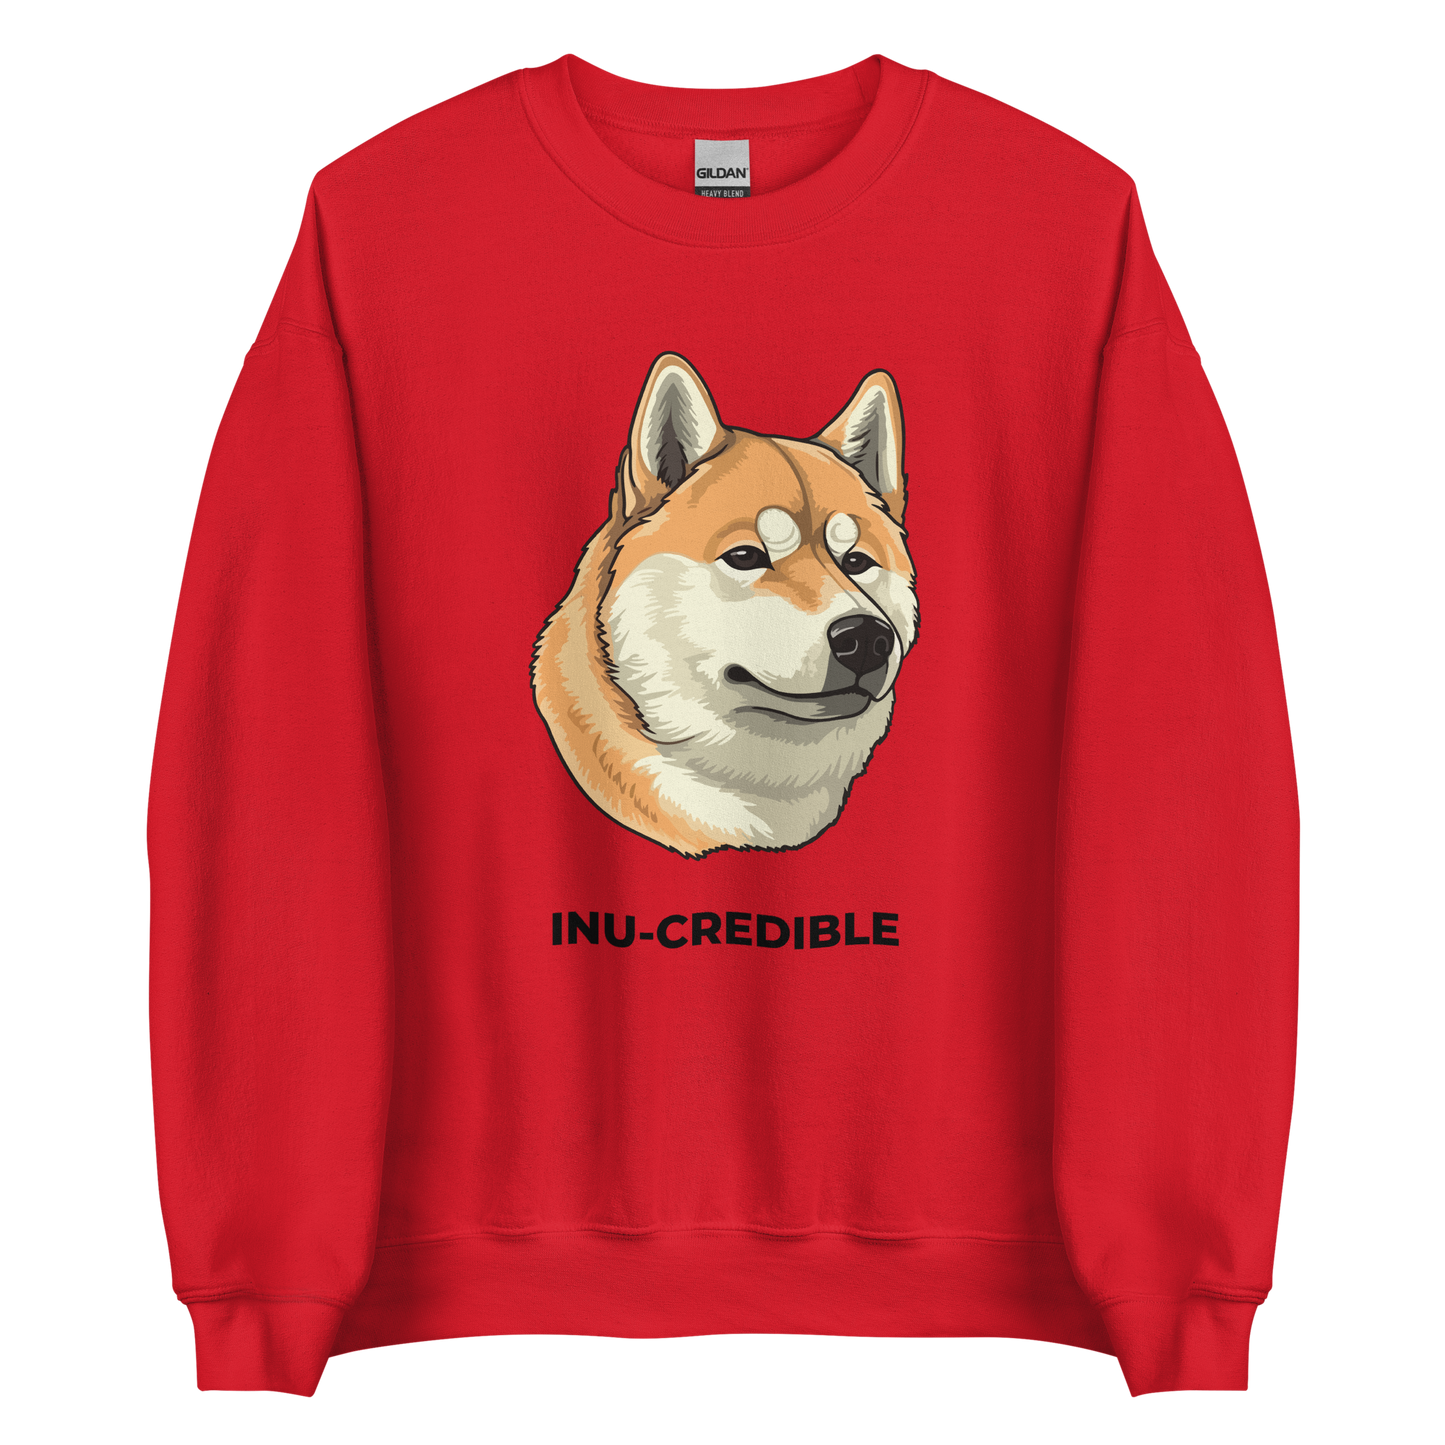 Red Shiba Inu Sweatshirt featuring the Inu-Credible graphic on the chest - Funny Graphic Shiba Inu Sweatshirts - Boozy Fox